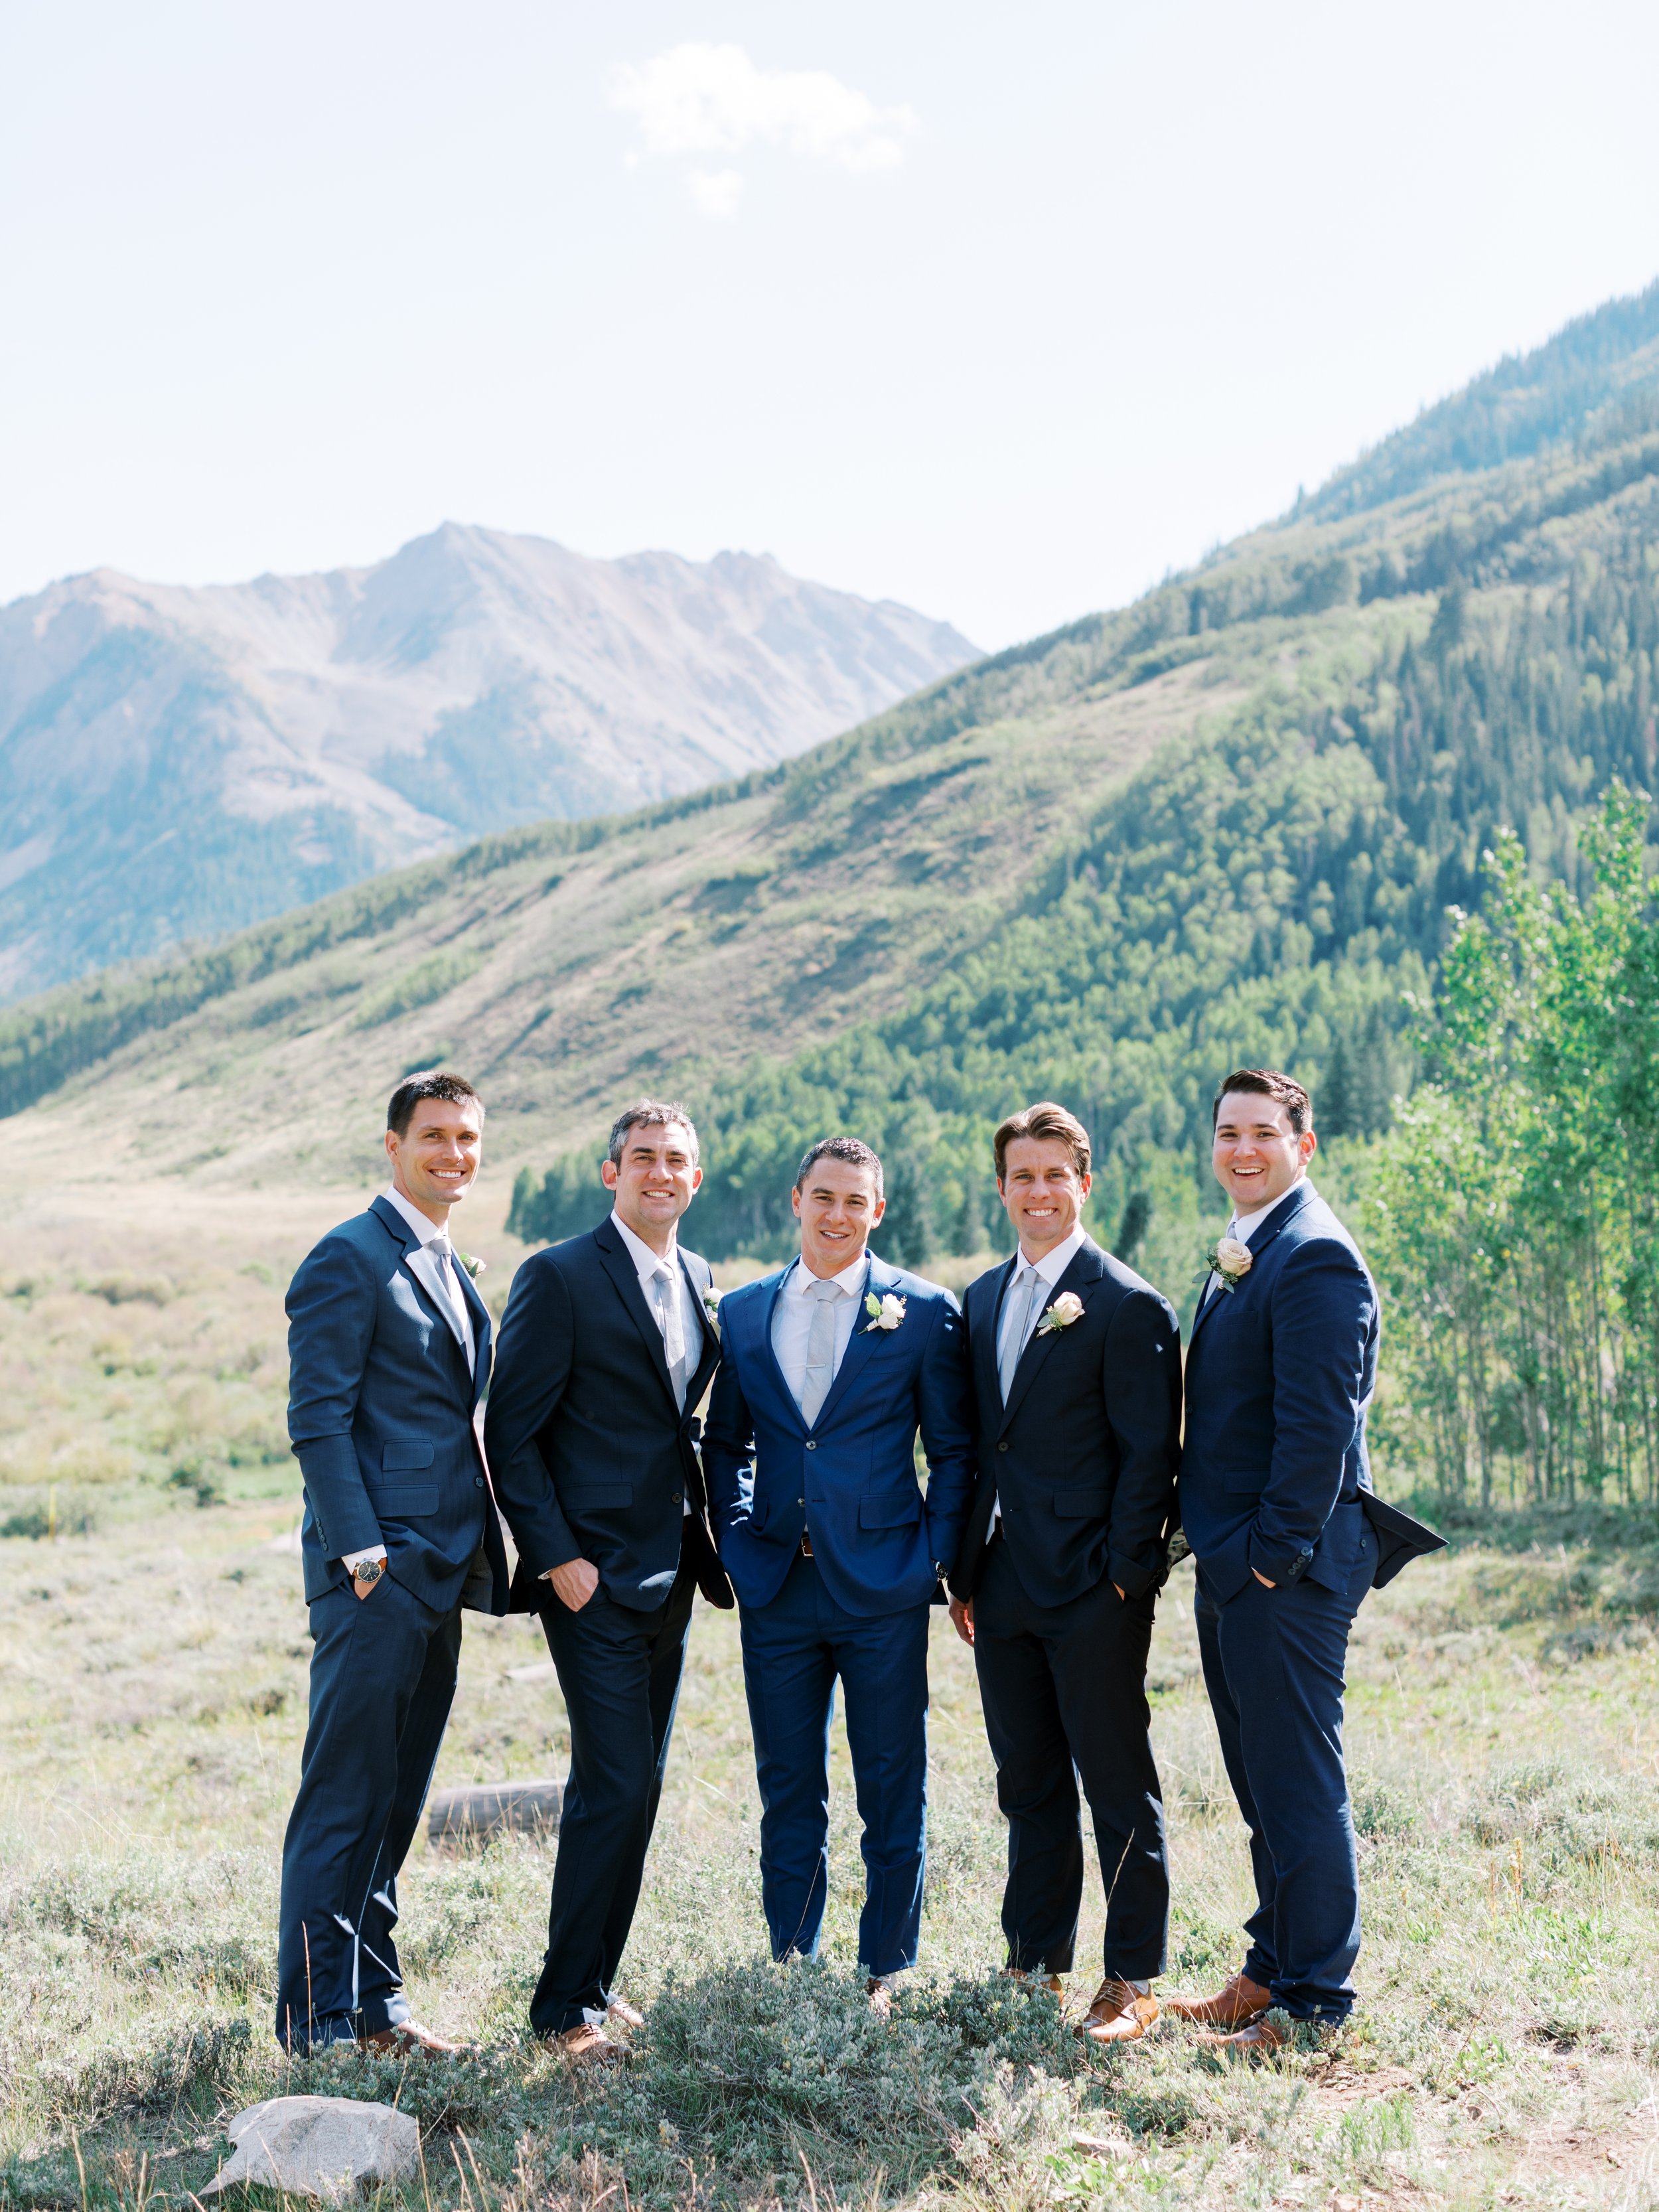 groomsmen in colorado wedding in blue suits.